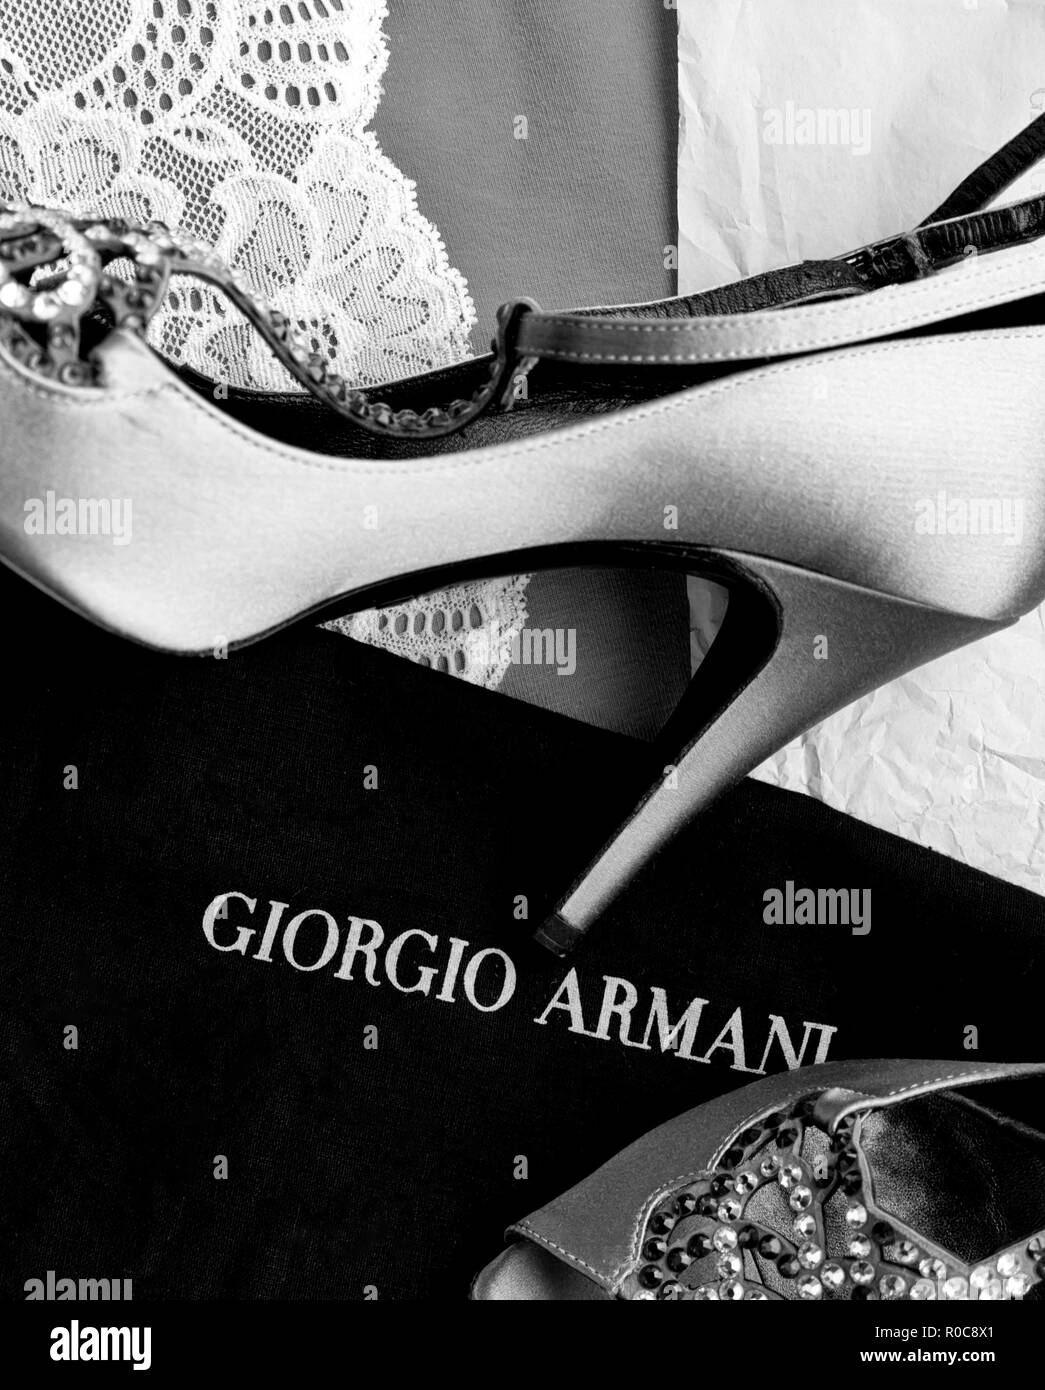 Giorgio armani Black and White Stock Photos & Images - Alamy